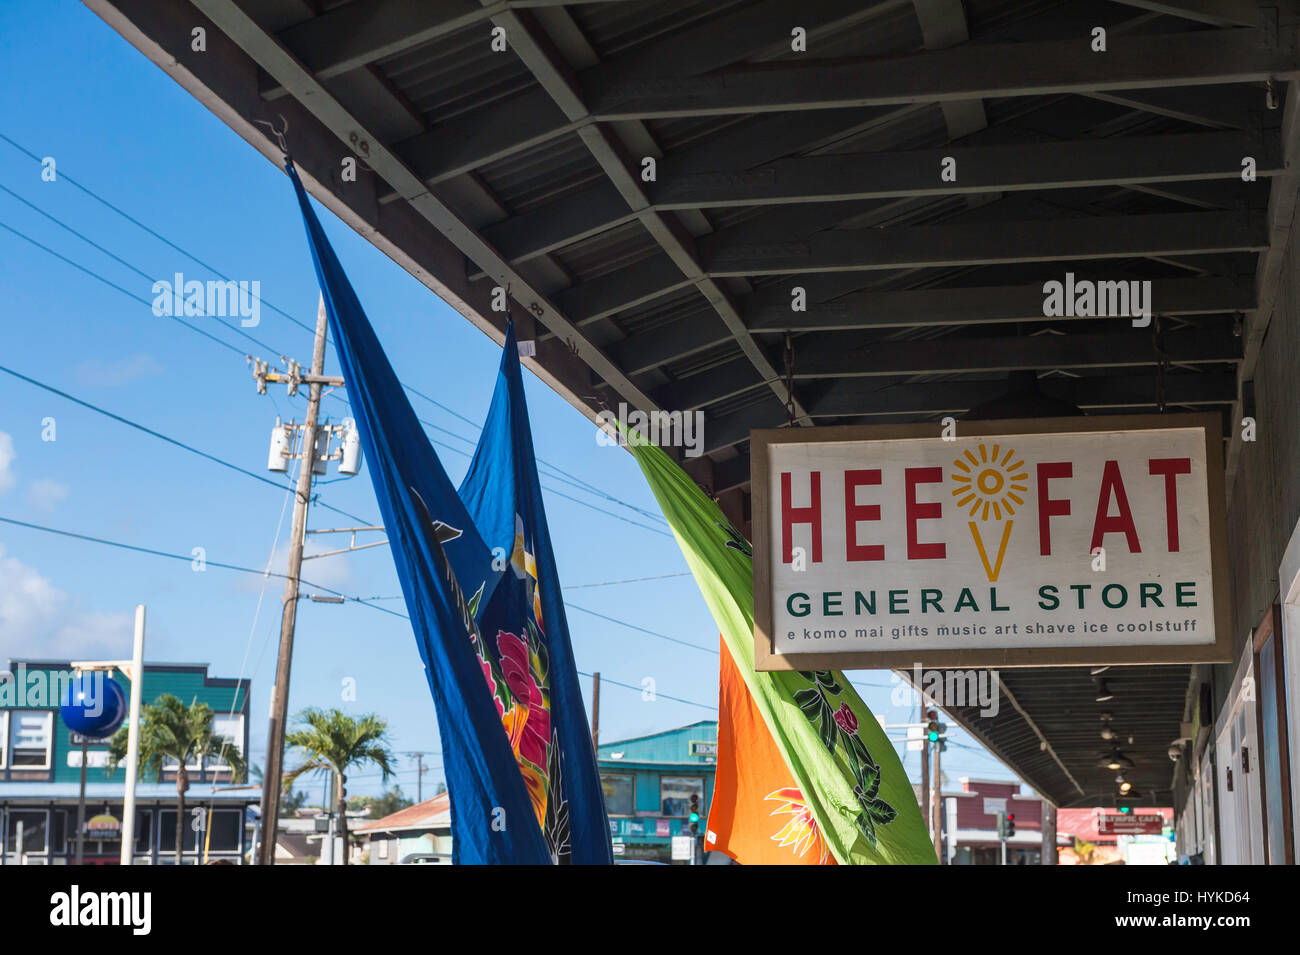 Hee Fat General Store sign, Kapa'a, Kauai, Hawaii, USA Stock Photo